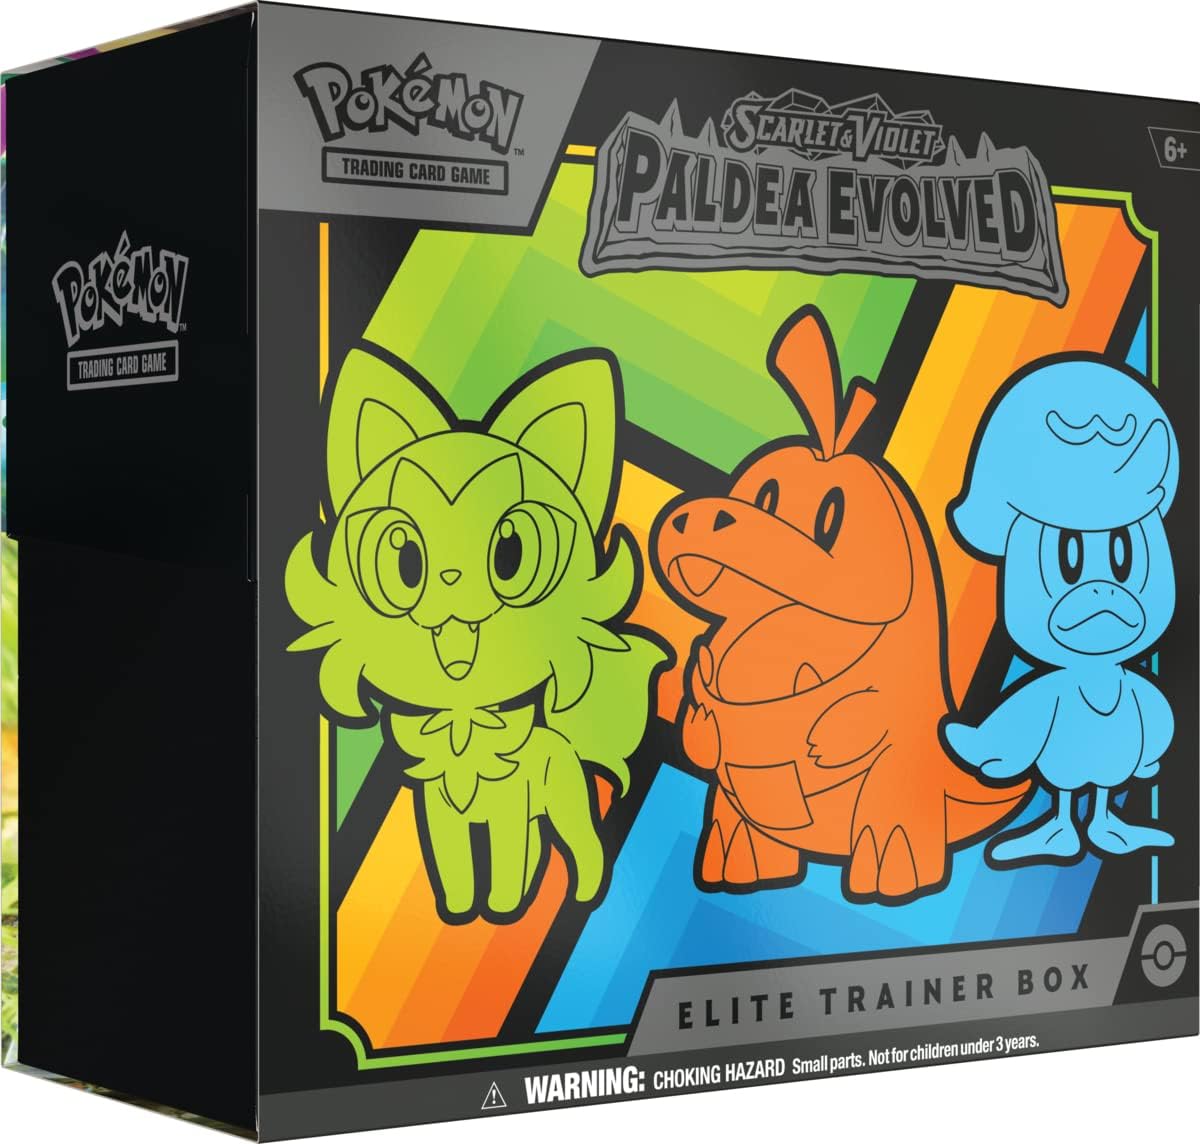 Pokemon TCG: Elite Trainer Box Scarlet & Violet – PALDEA EVOLVED